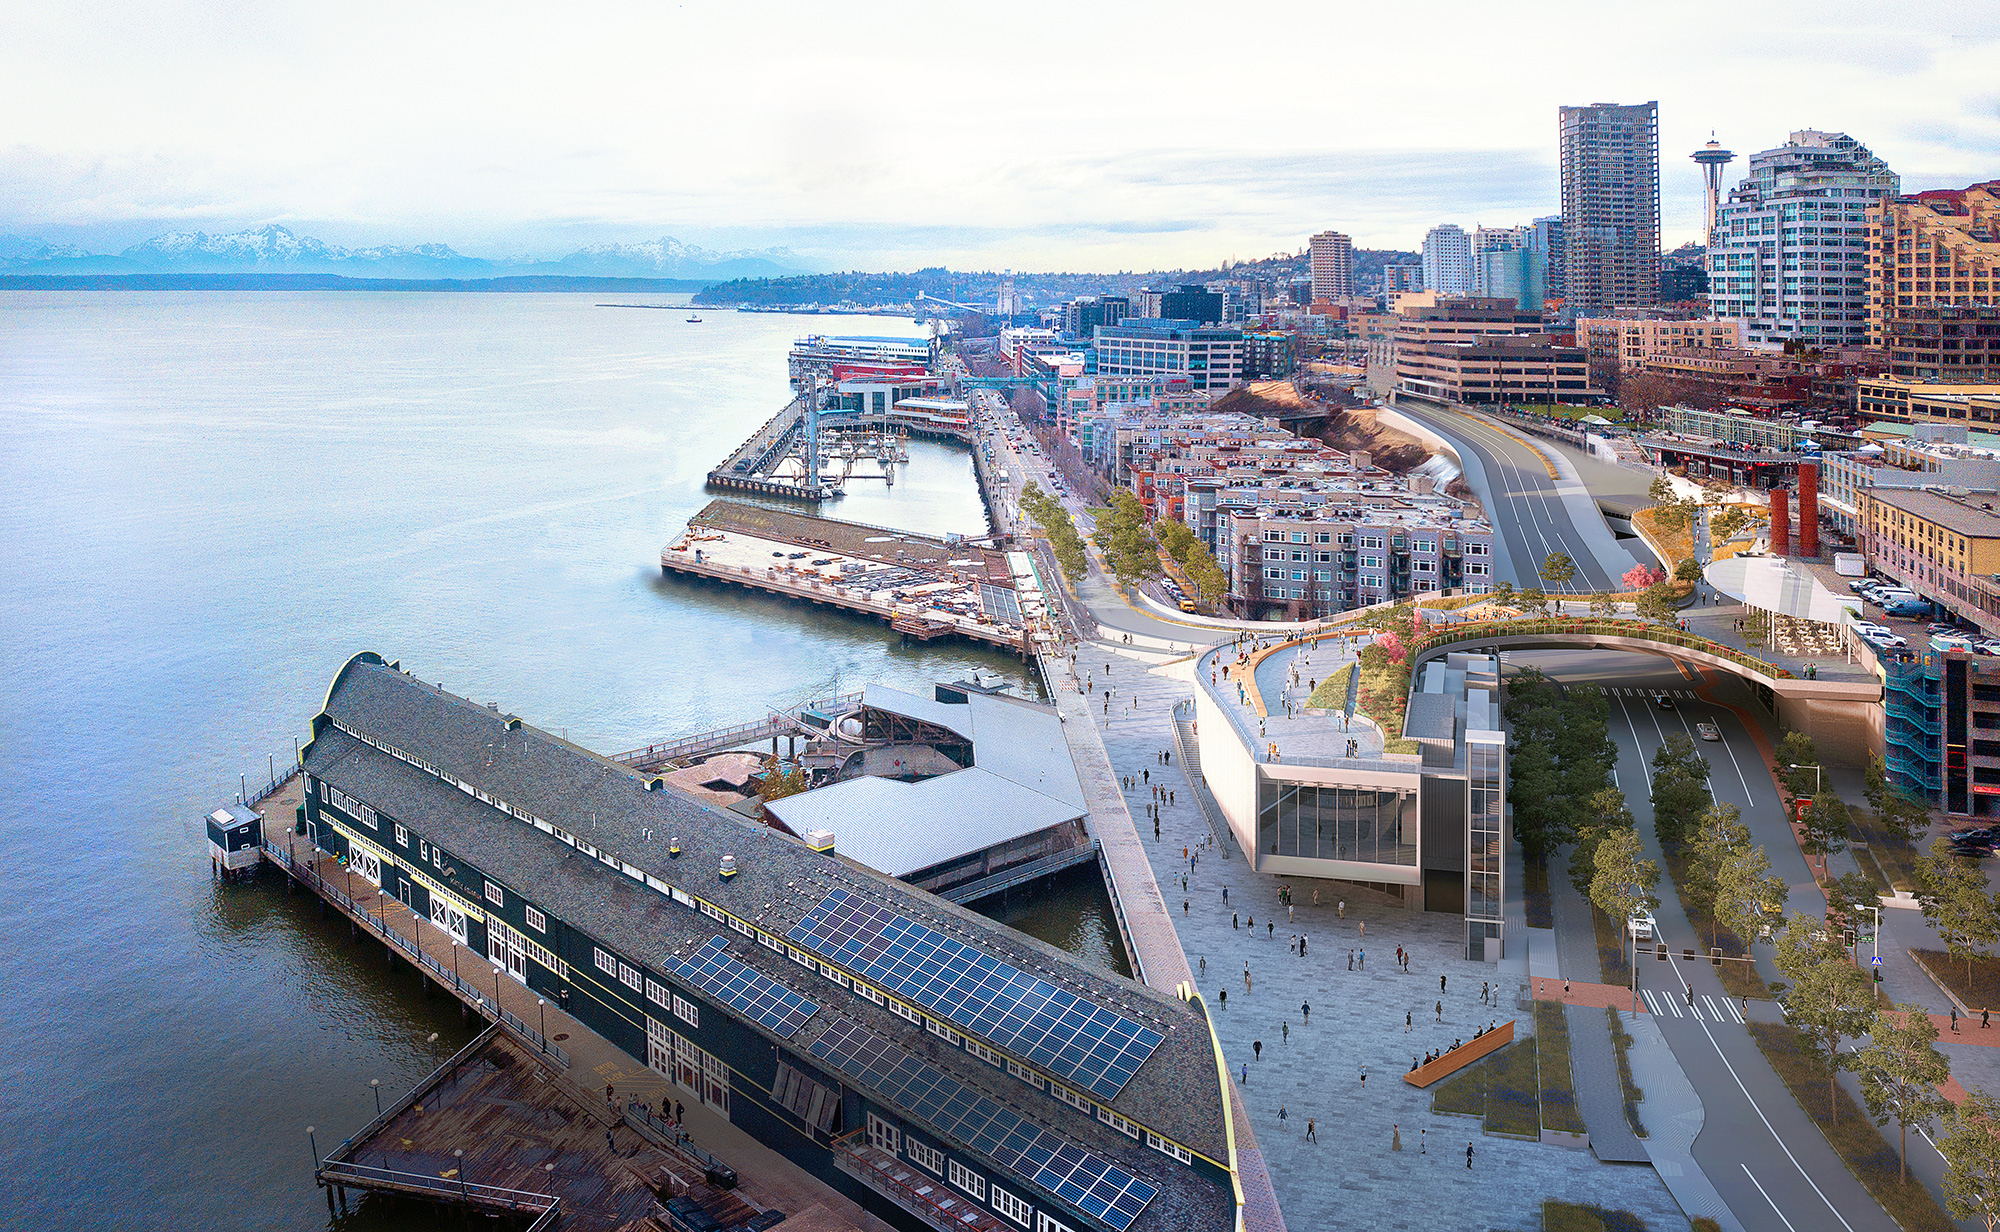 Seattle Aquarium Ocean Pavilion - LMN Architects